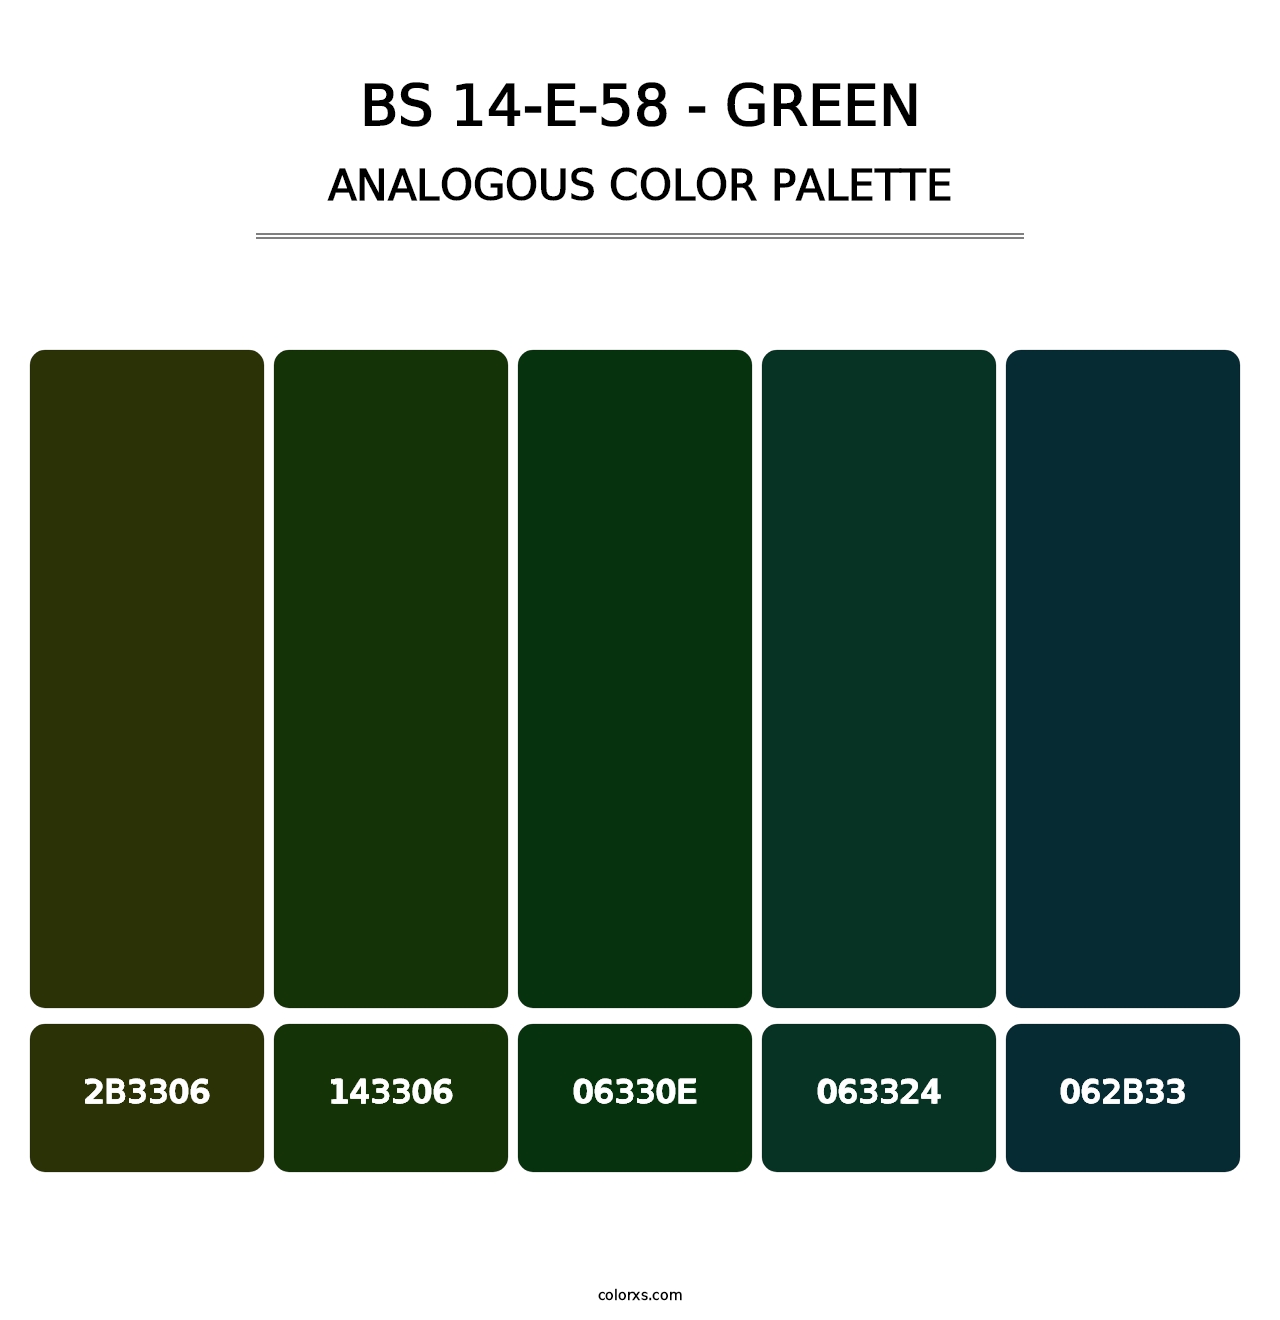 BS 14-E-58 - Green - Analogous Color Palette